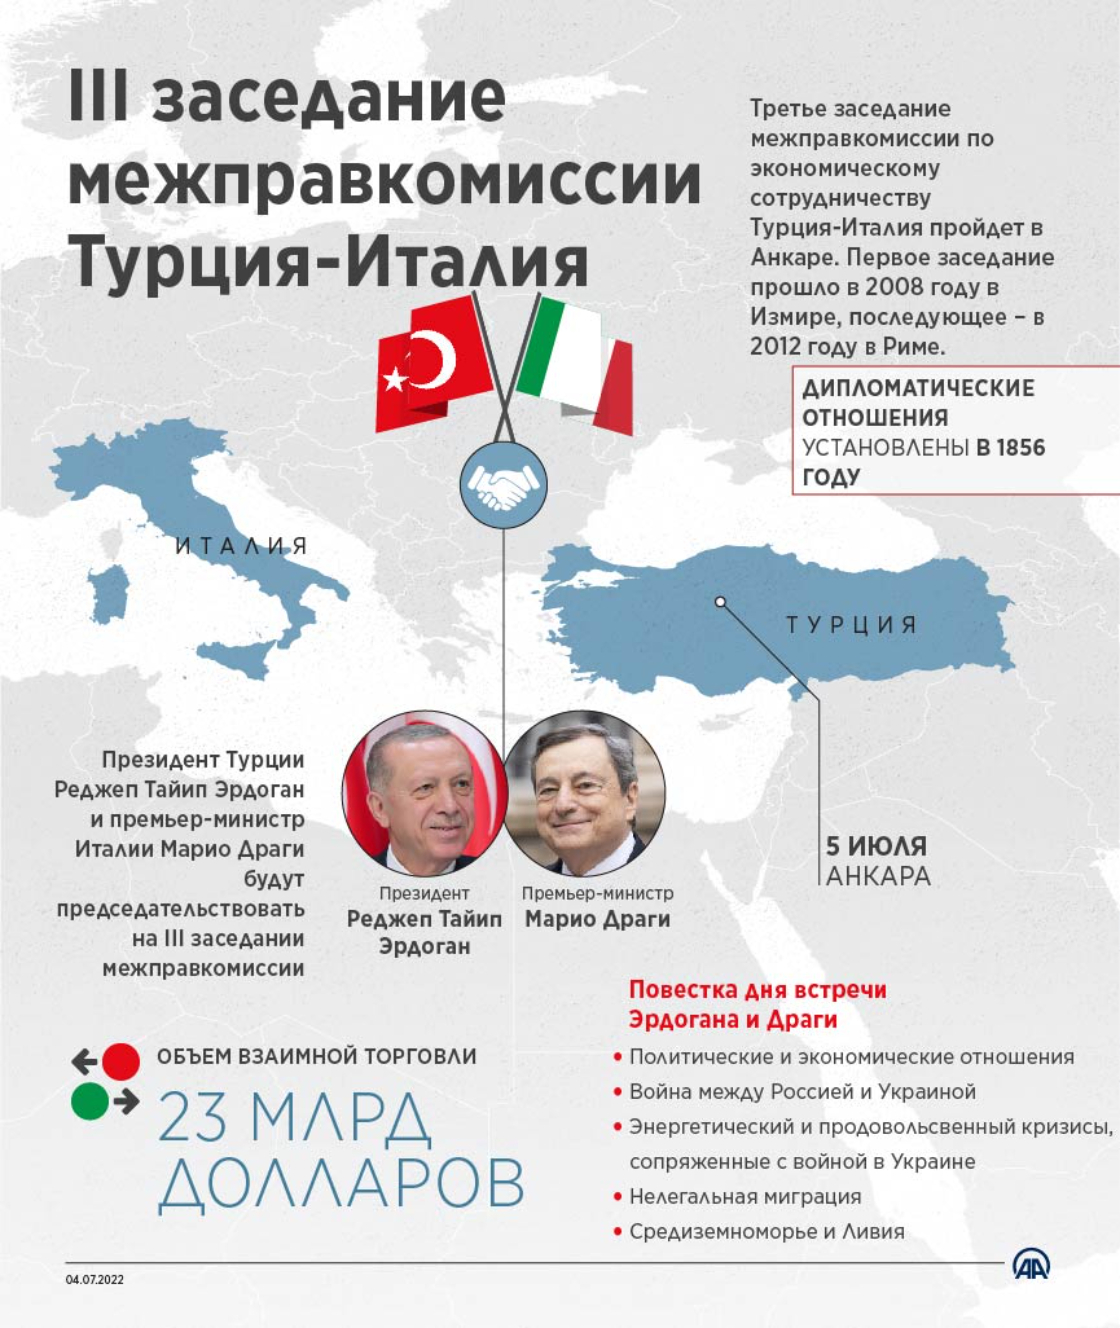 III заседание межправкомиссии Турция-Италия